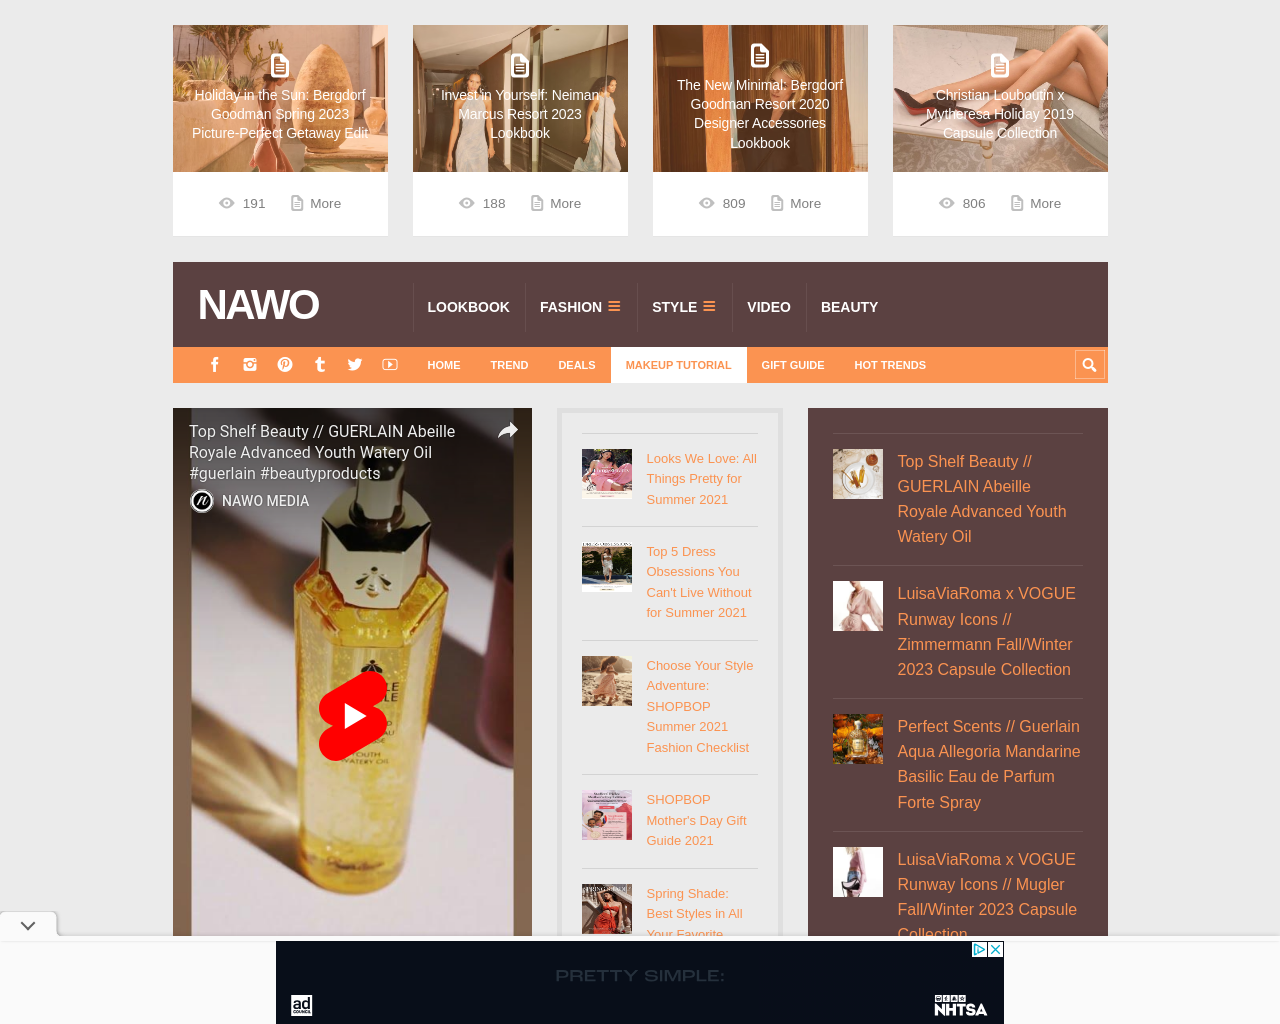 nawo.com